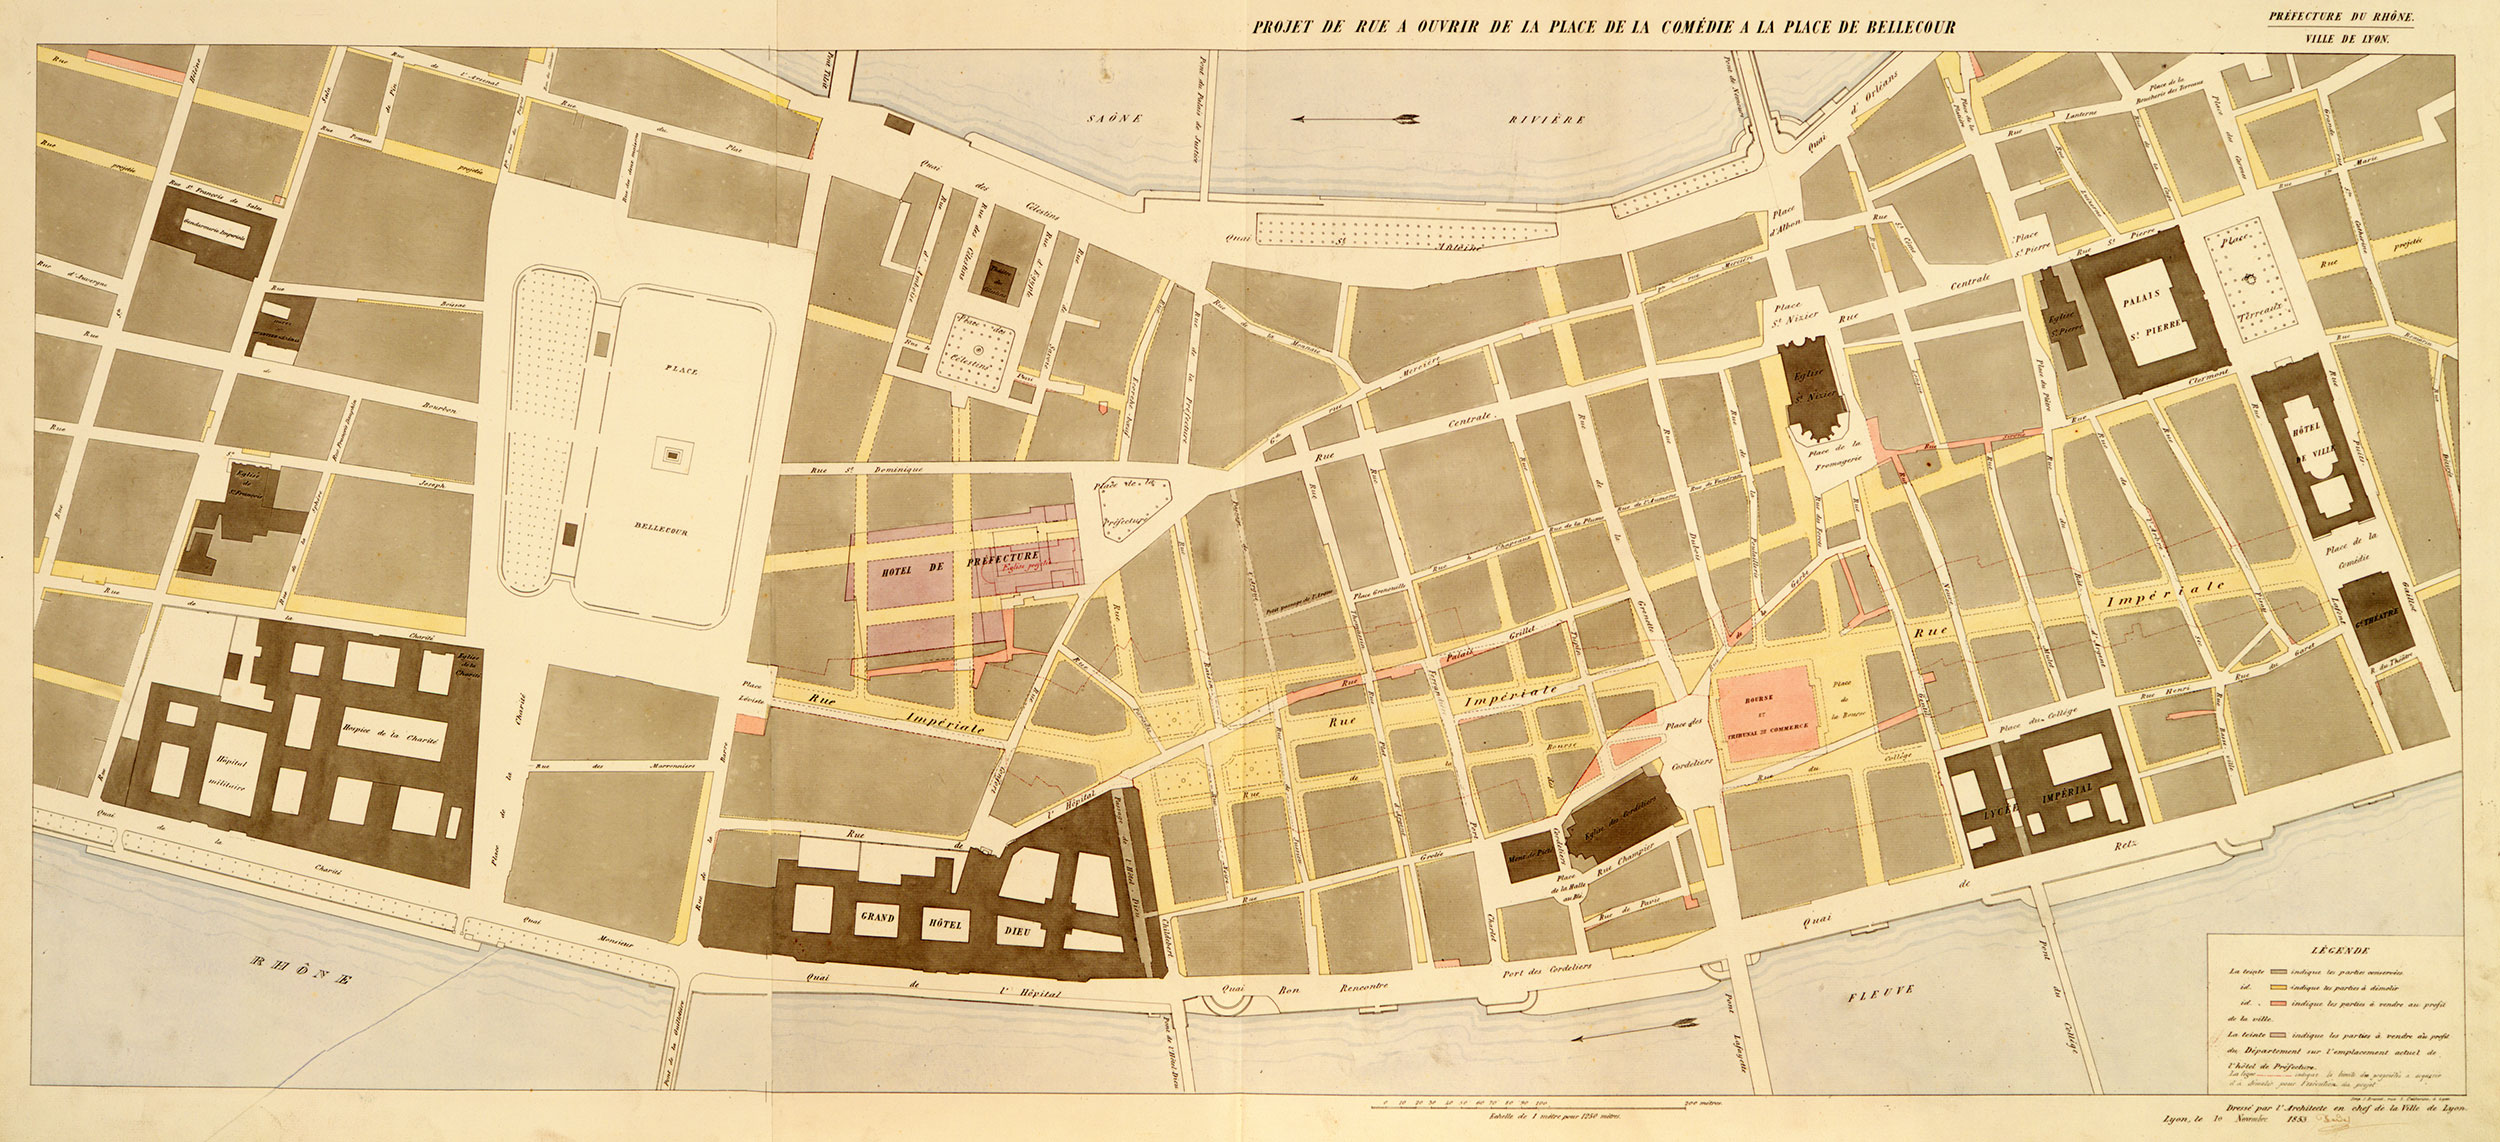 Plan de la rue Impériale en 1853 - 1541wp/30